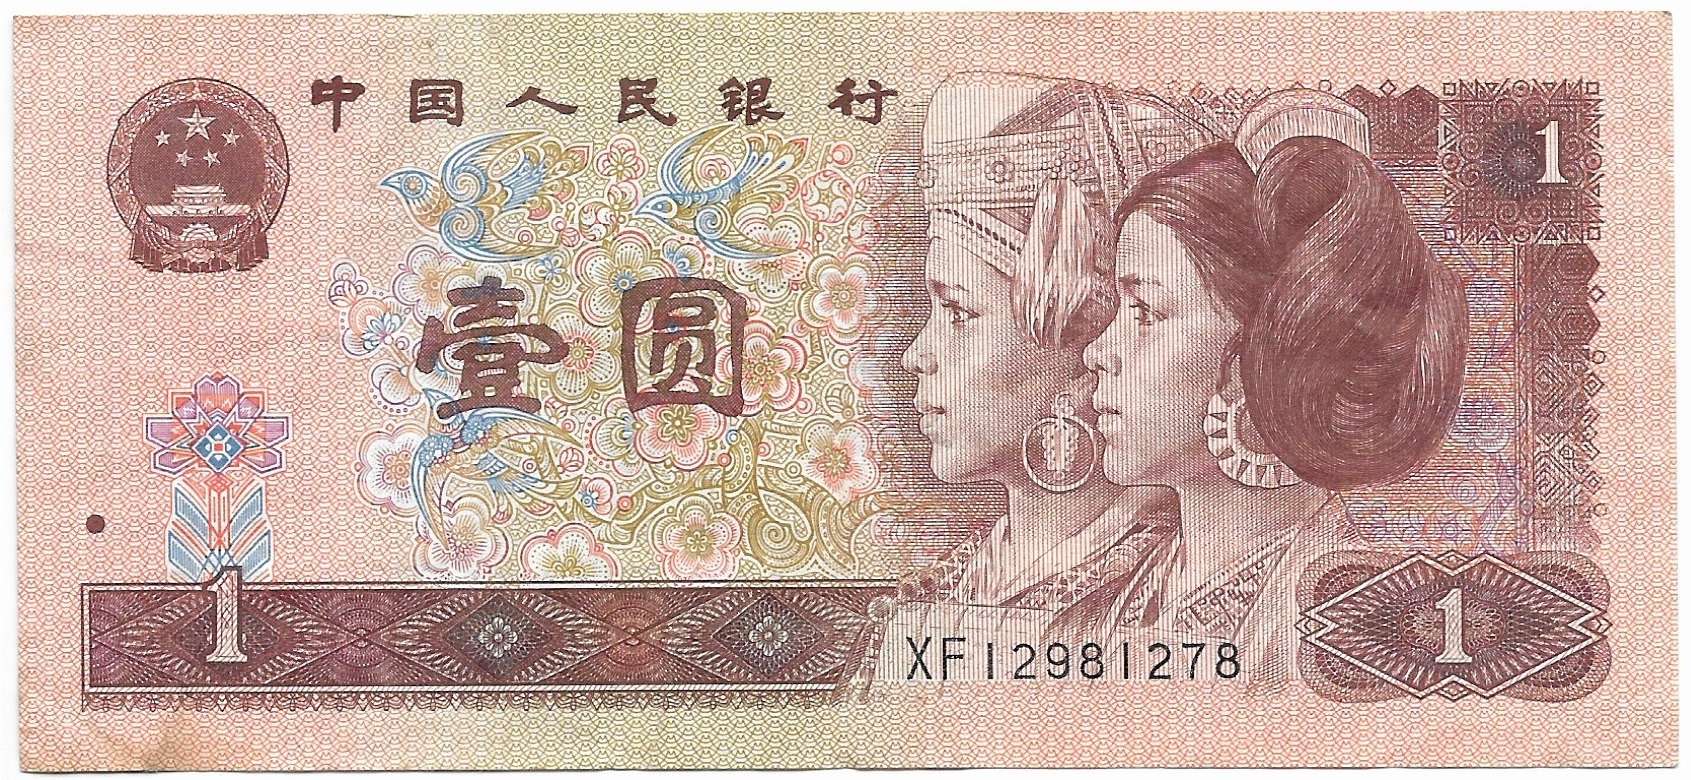 China 1996 1 Yuan.jpg